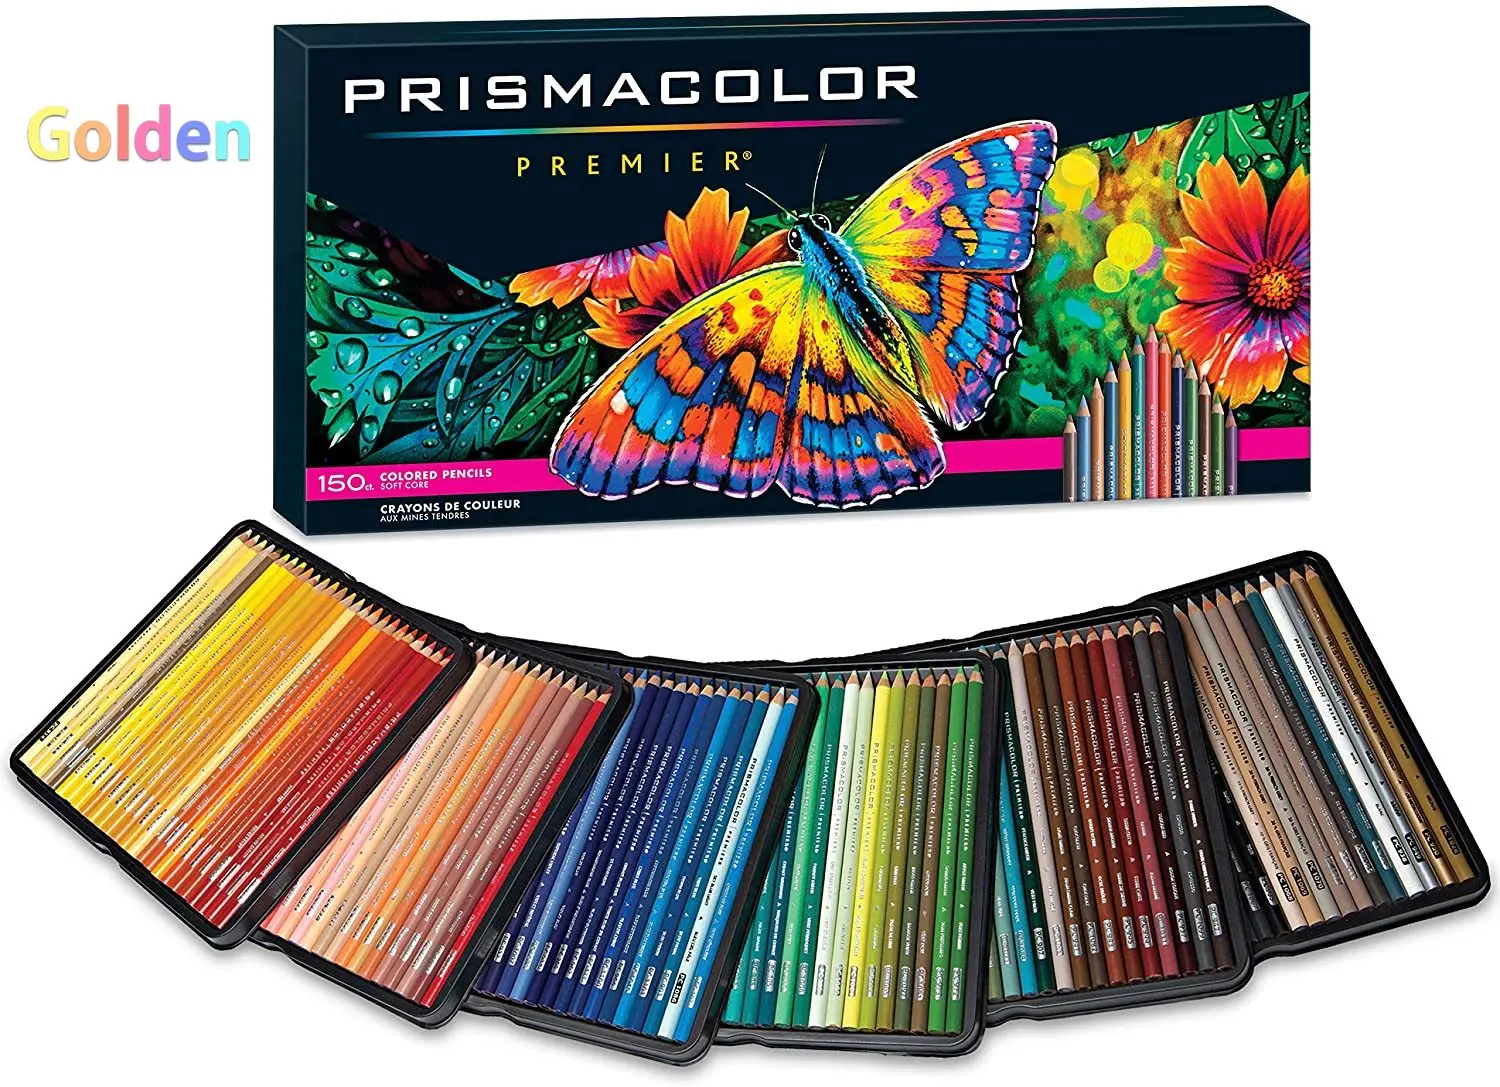 https://ae01.alicdn.com/kf/S75a2fccaeba043529994ea32c6c1611eQ/Original-USA-Prismacolor-Premier-Colored-Pencil-24-36-72-132-150-Color-Art-Supplies-for-Drawing.jpg